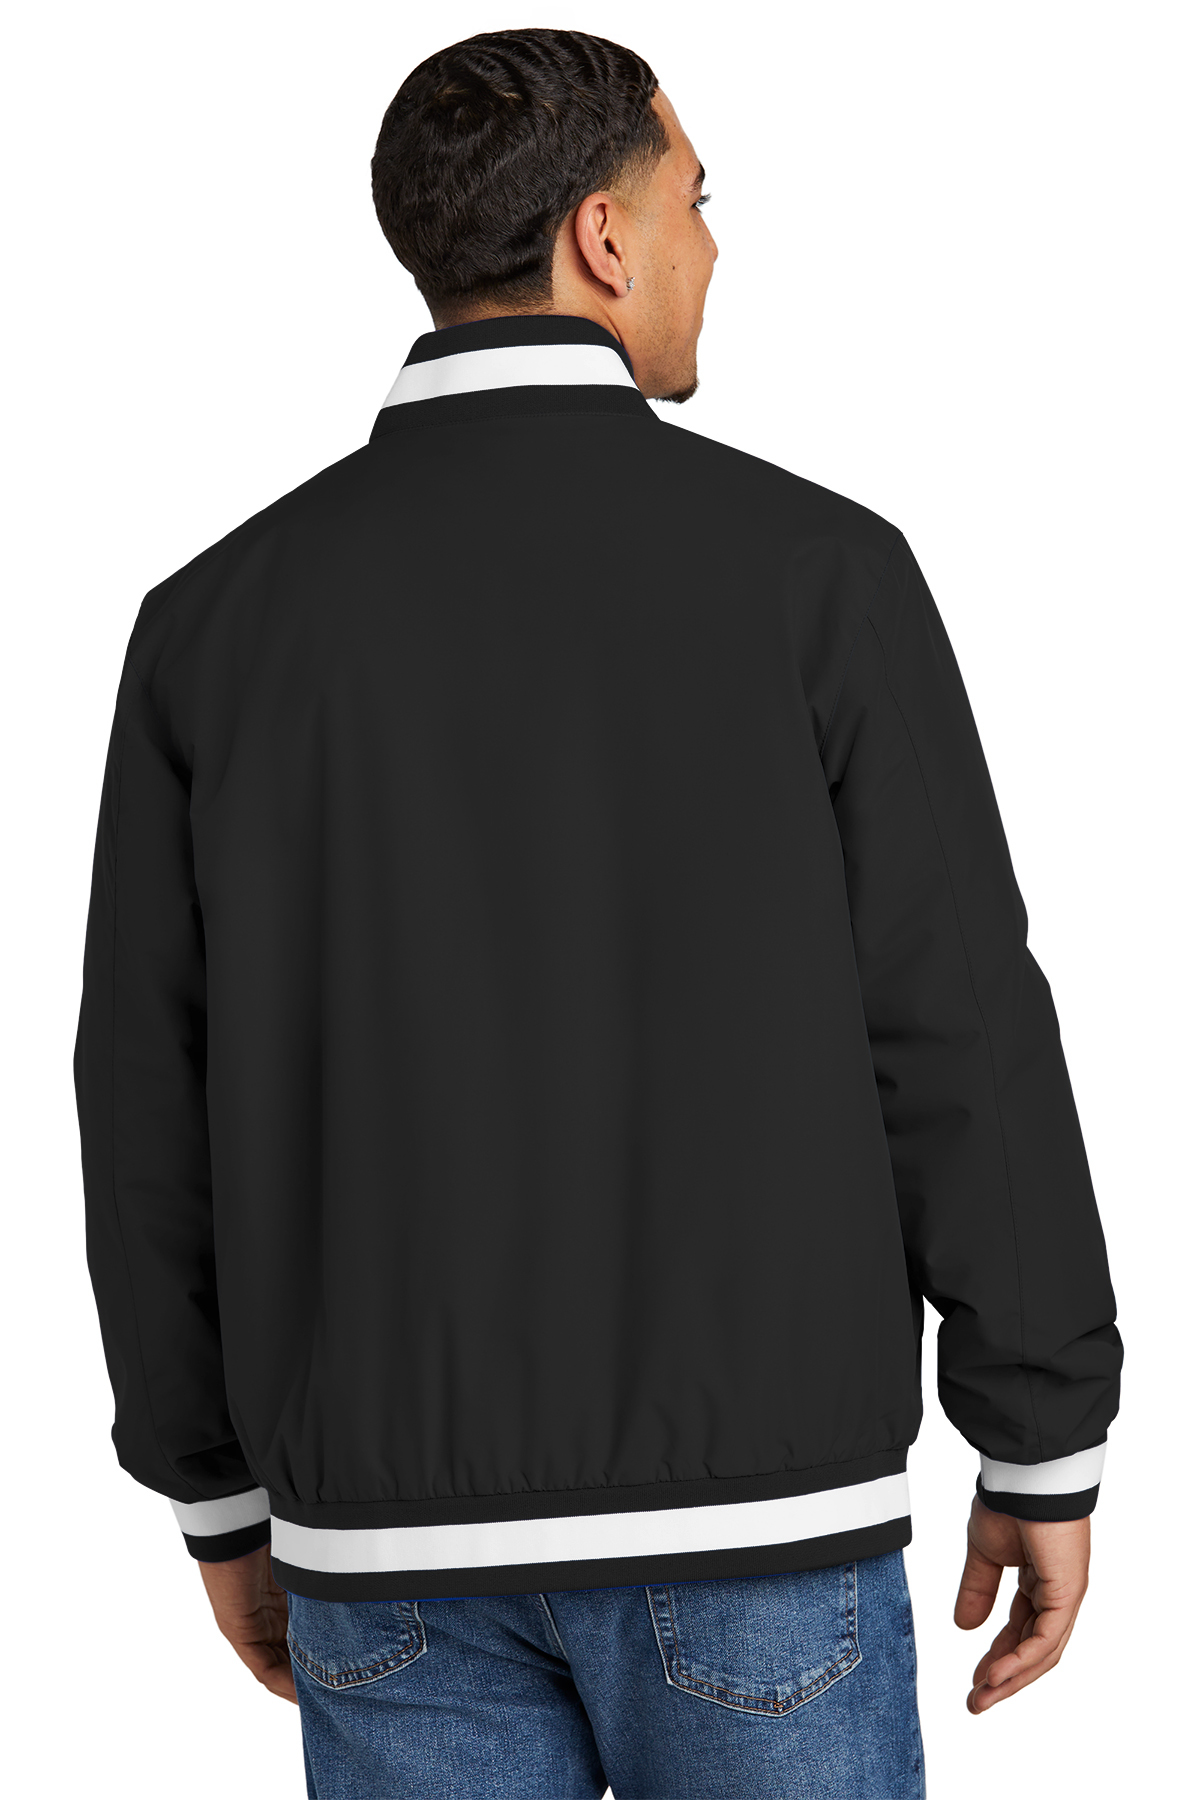 Sport-Tek Insulated Varsity Jacket | Product | Sport-Tek